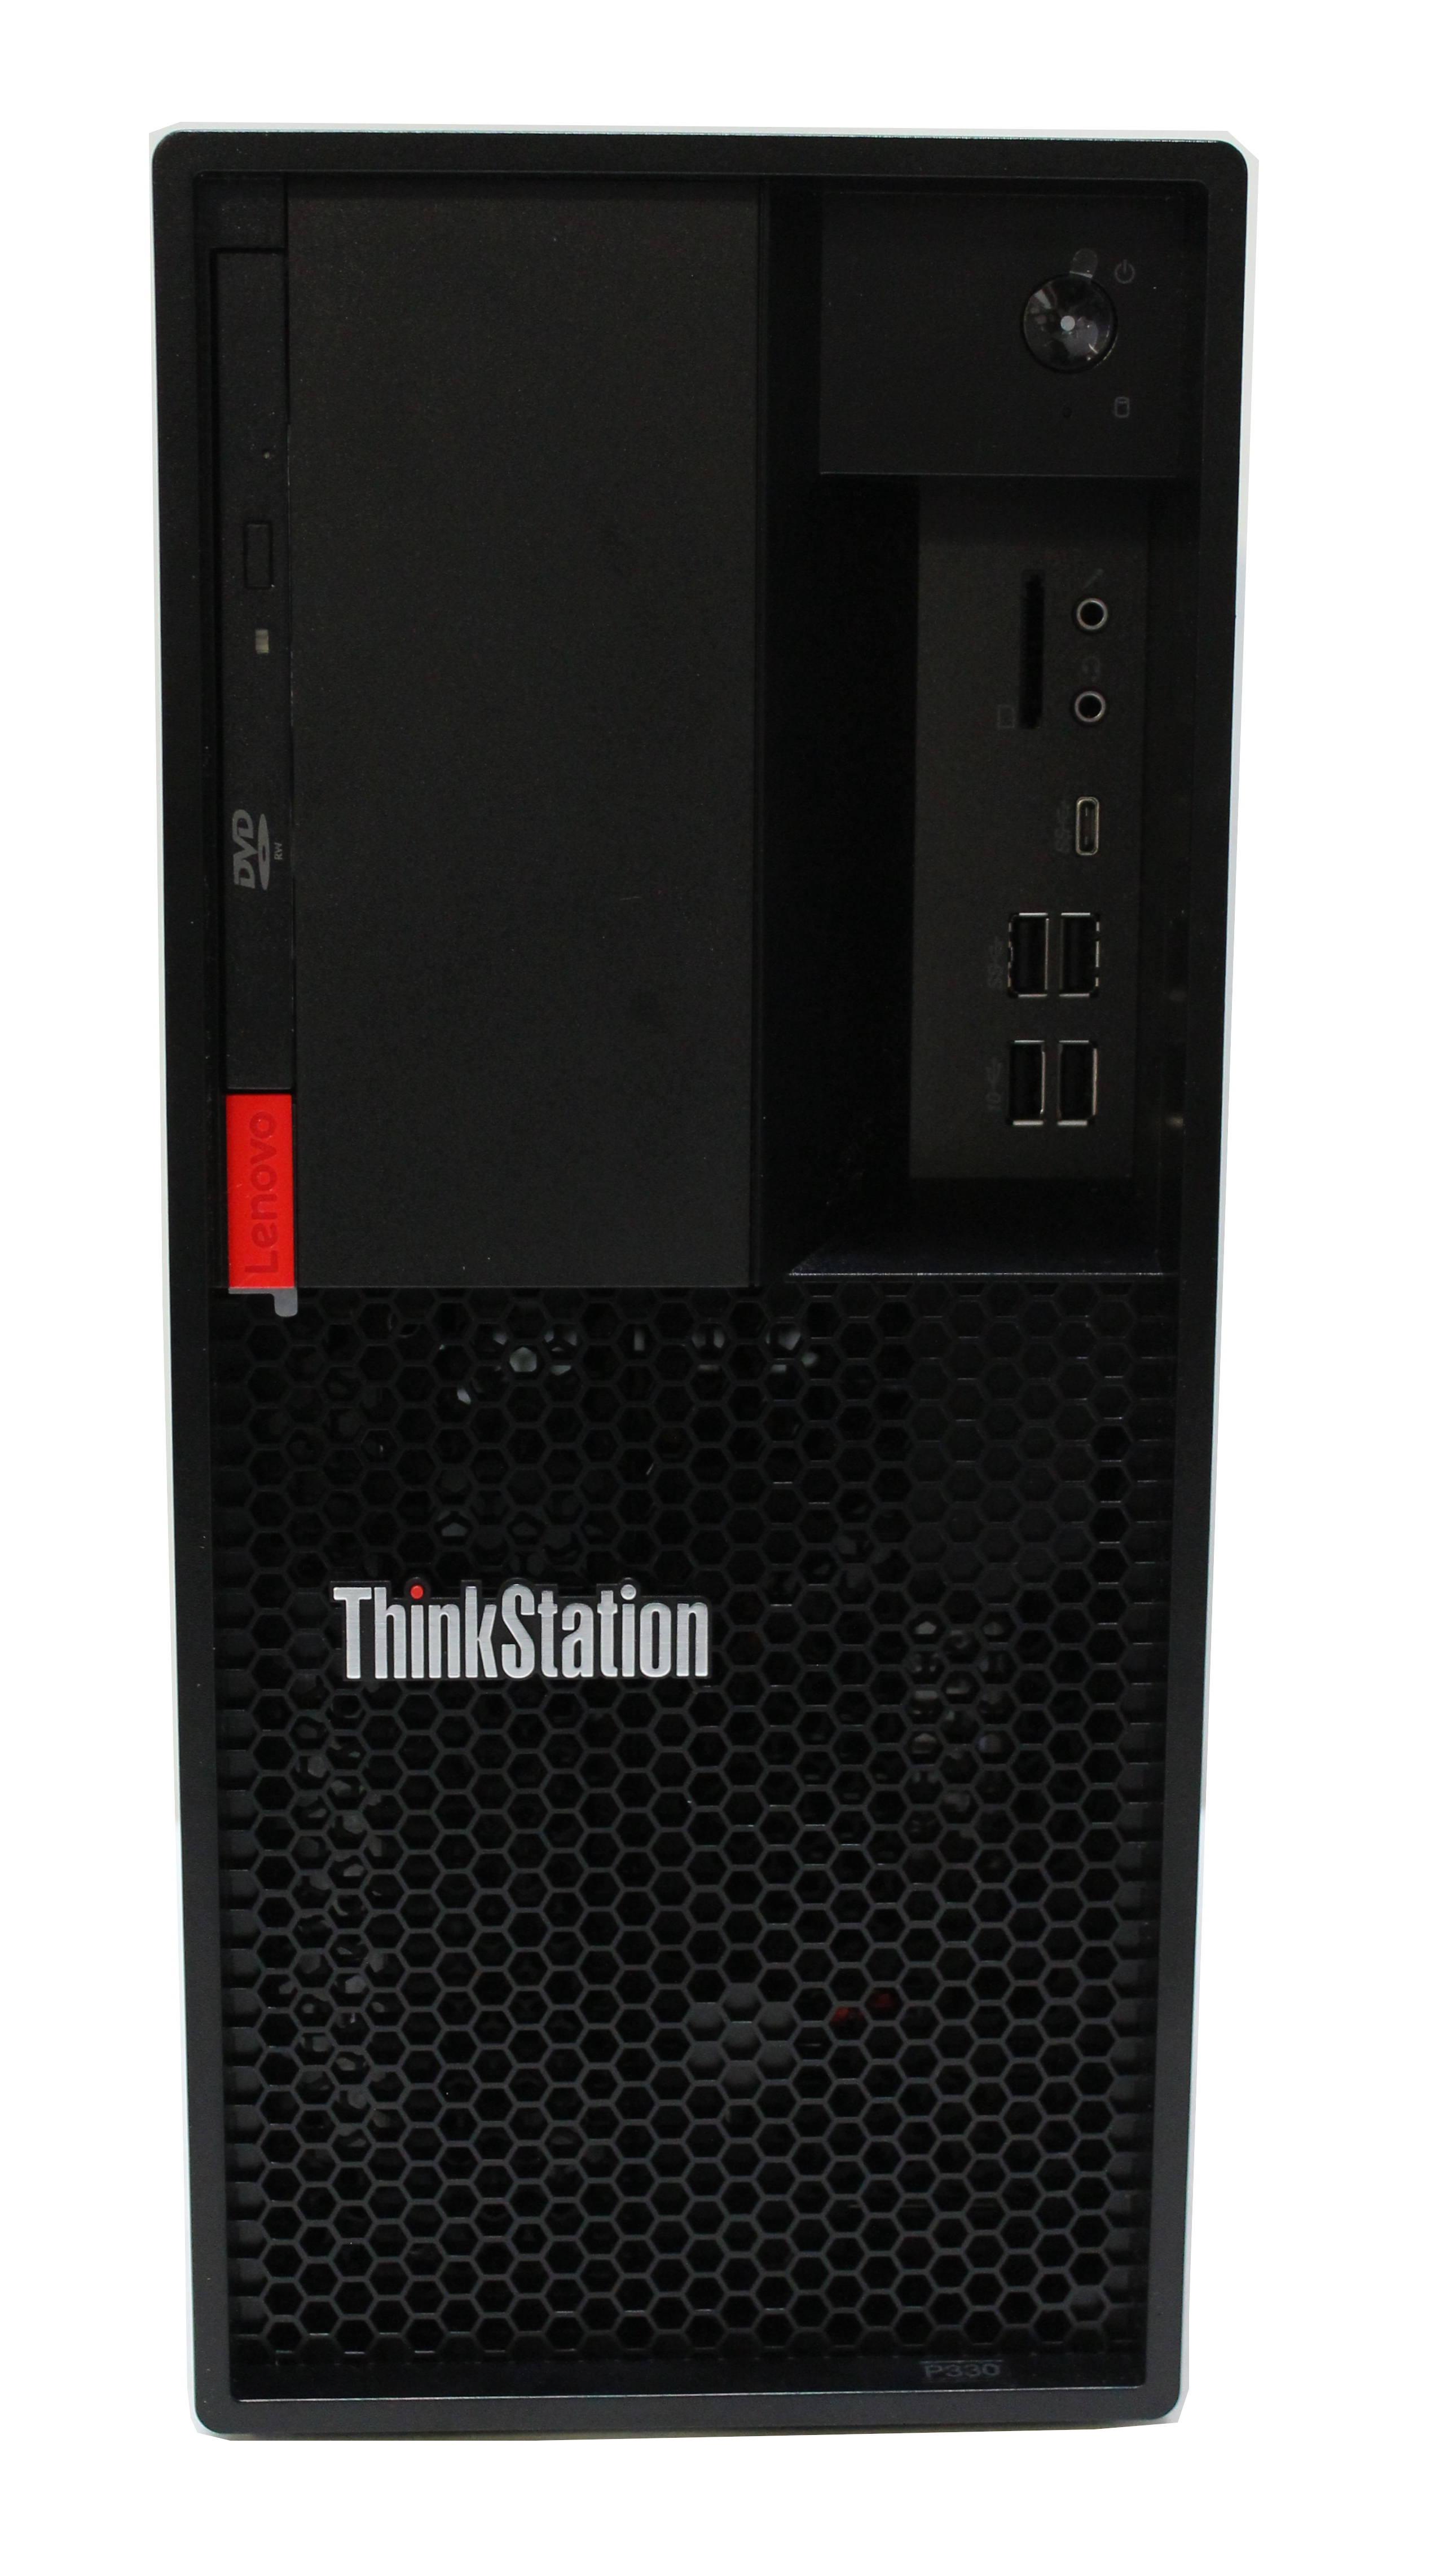 Lenovo Thinkstation P330 Core i9-9900 3.1GHz SSD 512GB RAM 32GB 30CY001CUS